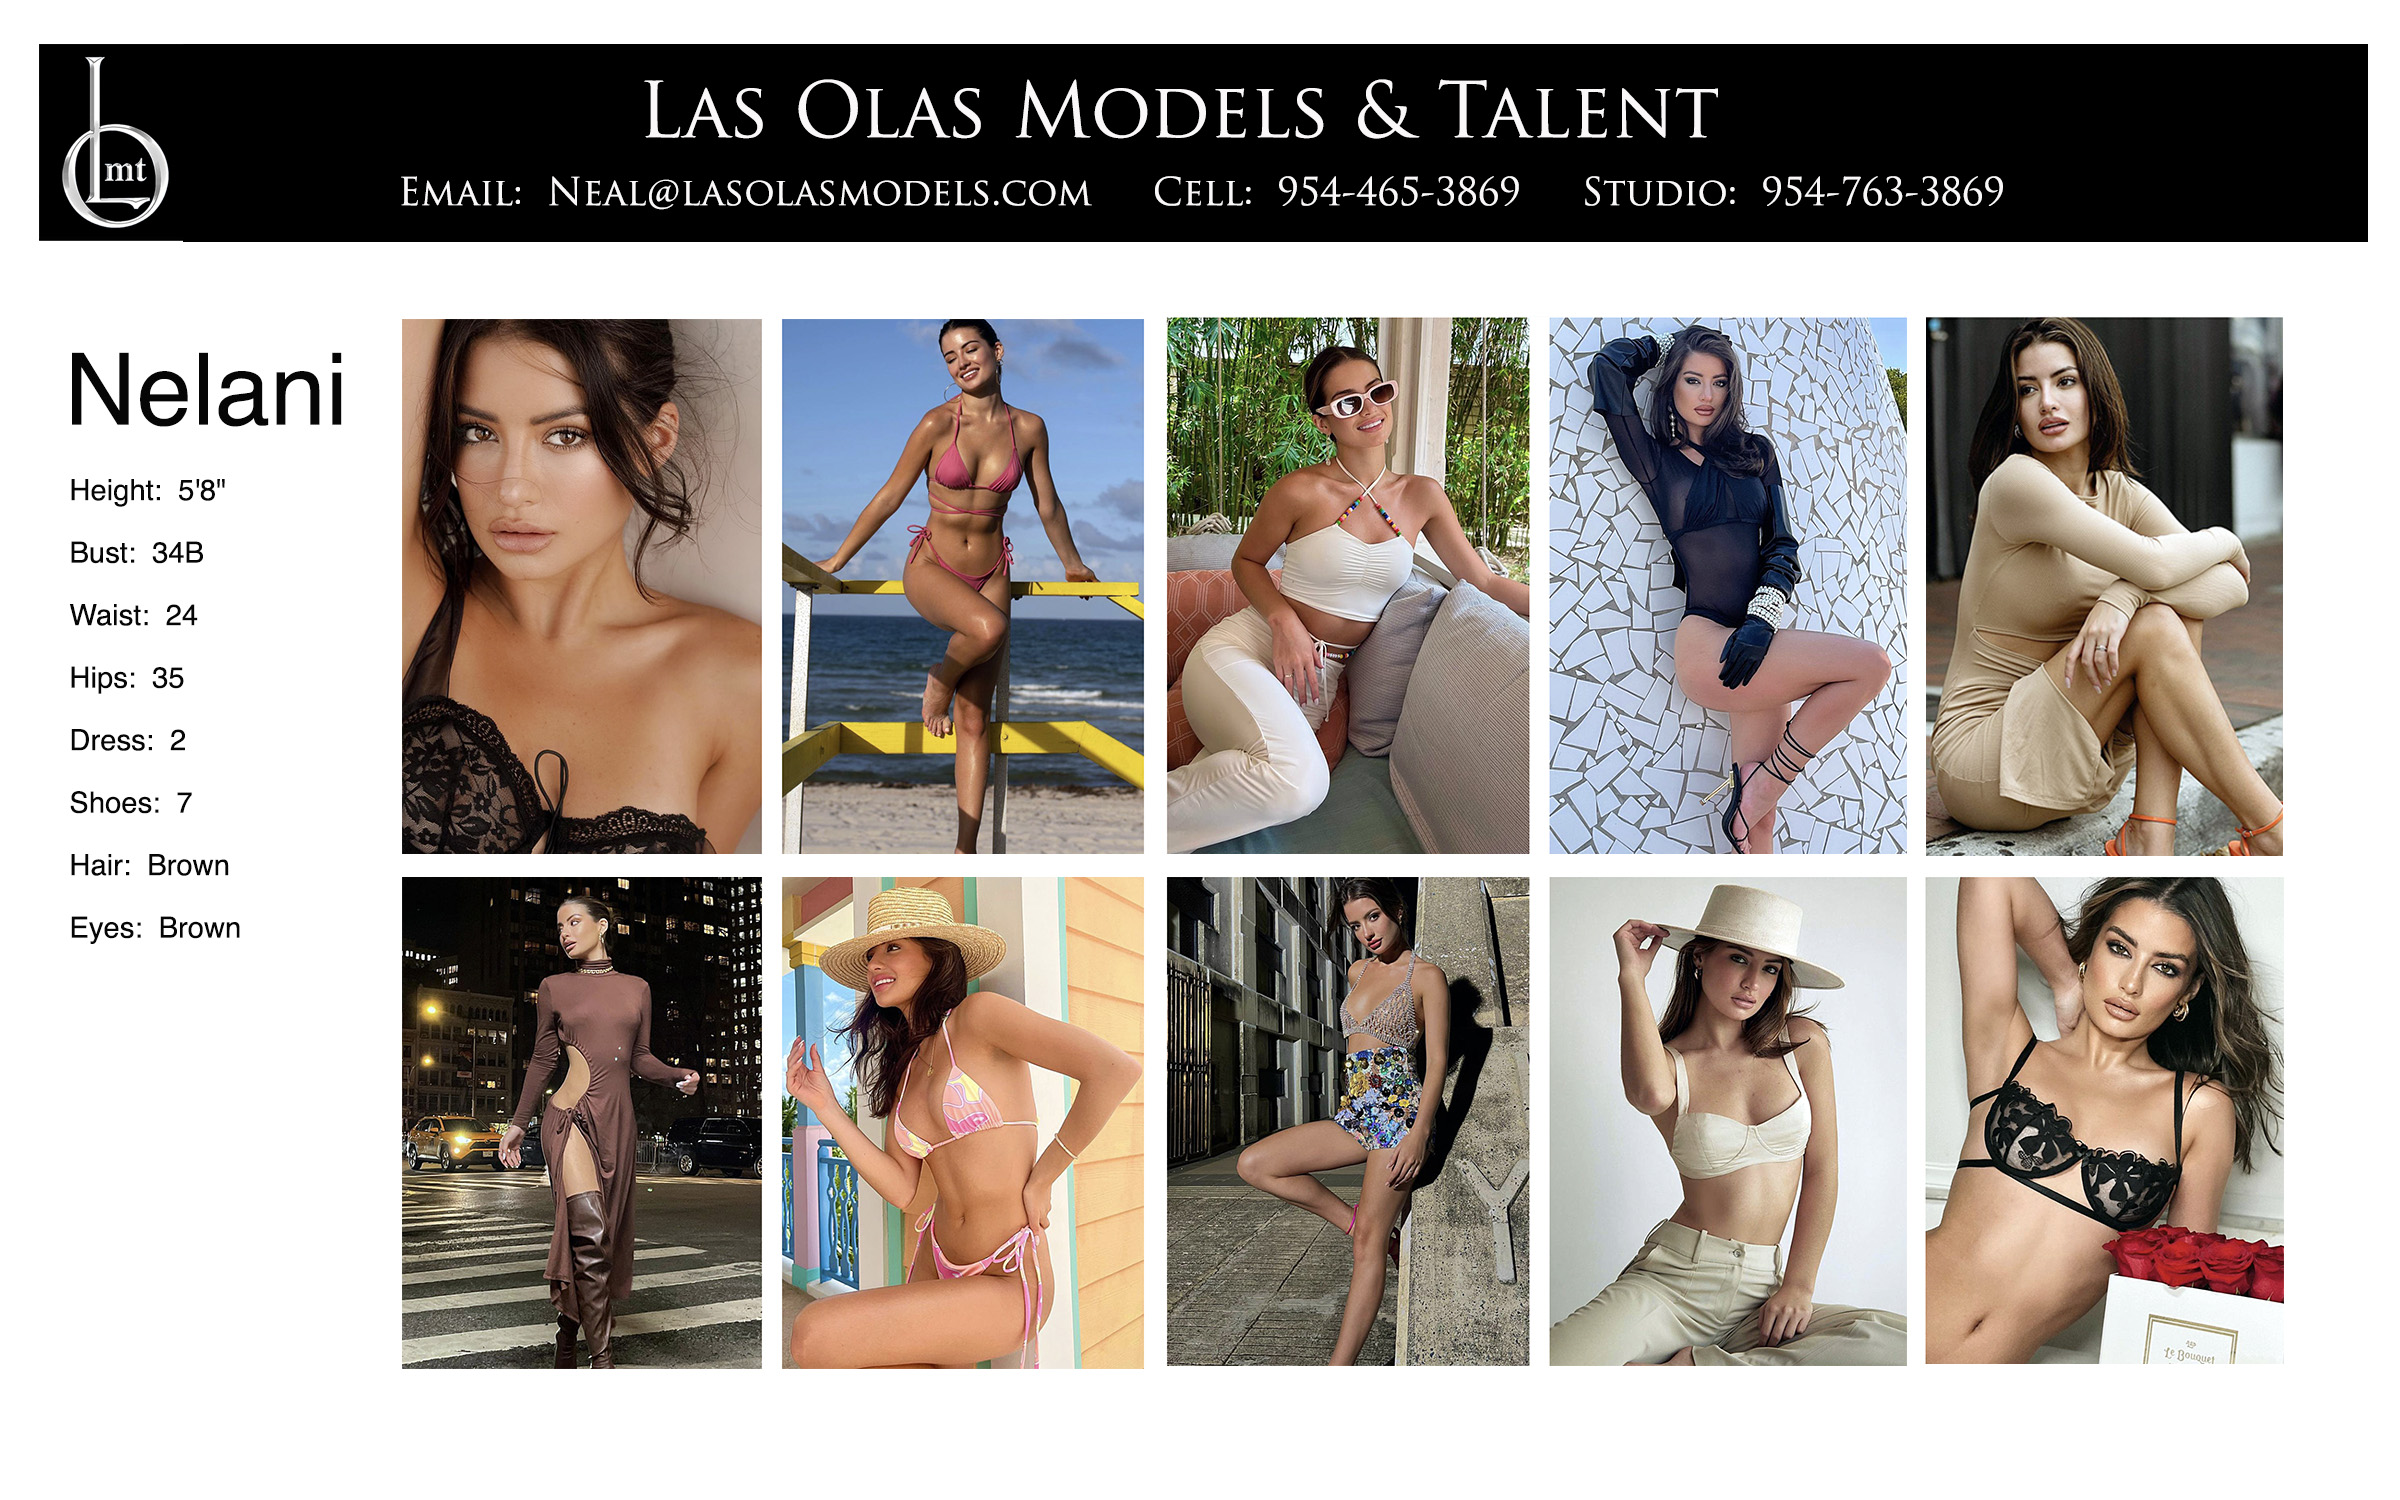 Models Fort Lauderdale Miami South Florida - Print Video Commercial - Las Olas Models & Talent - Nelani